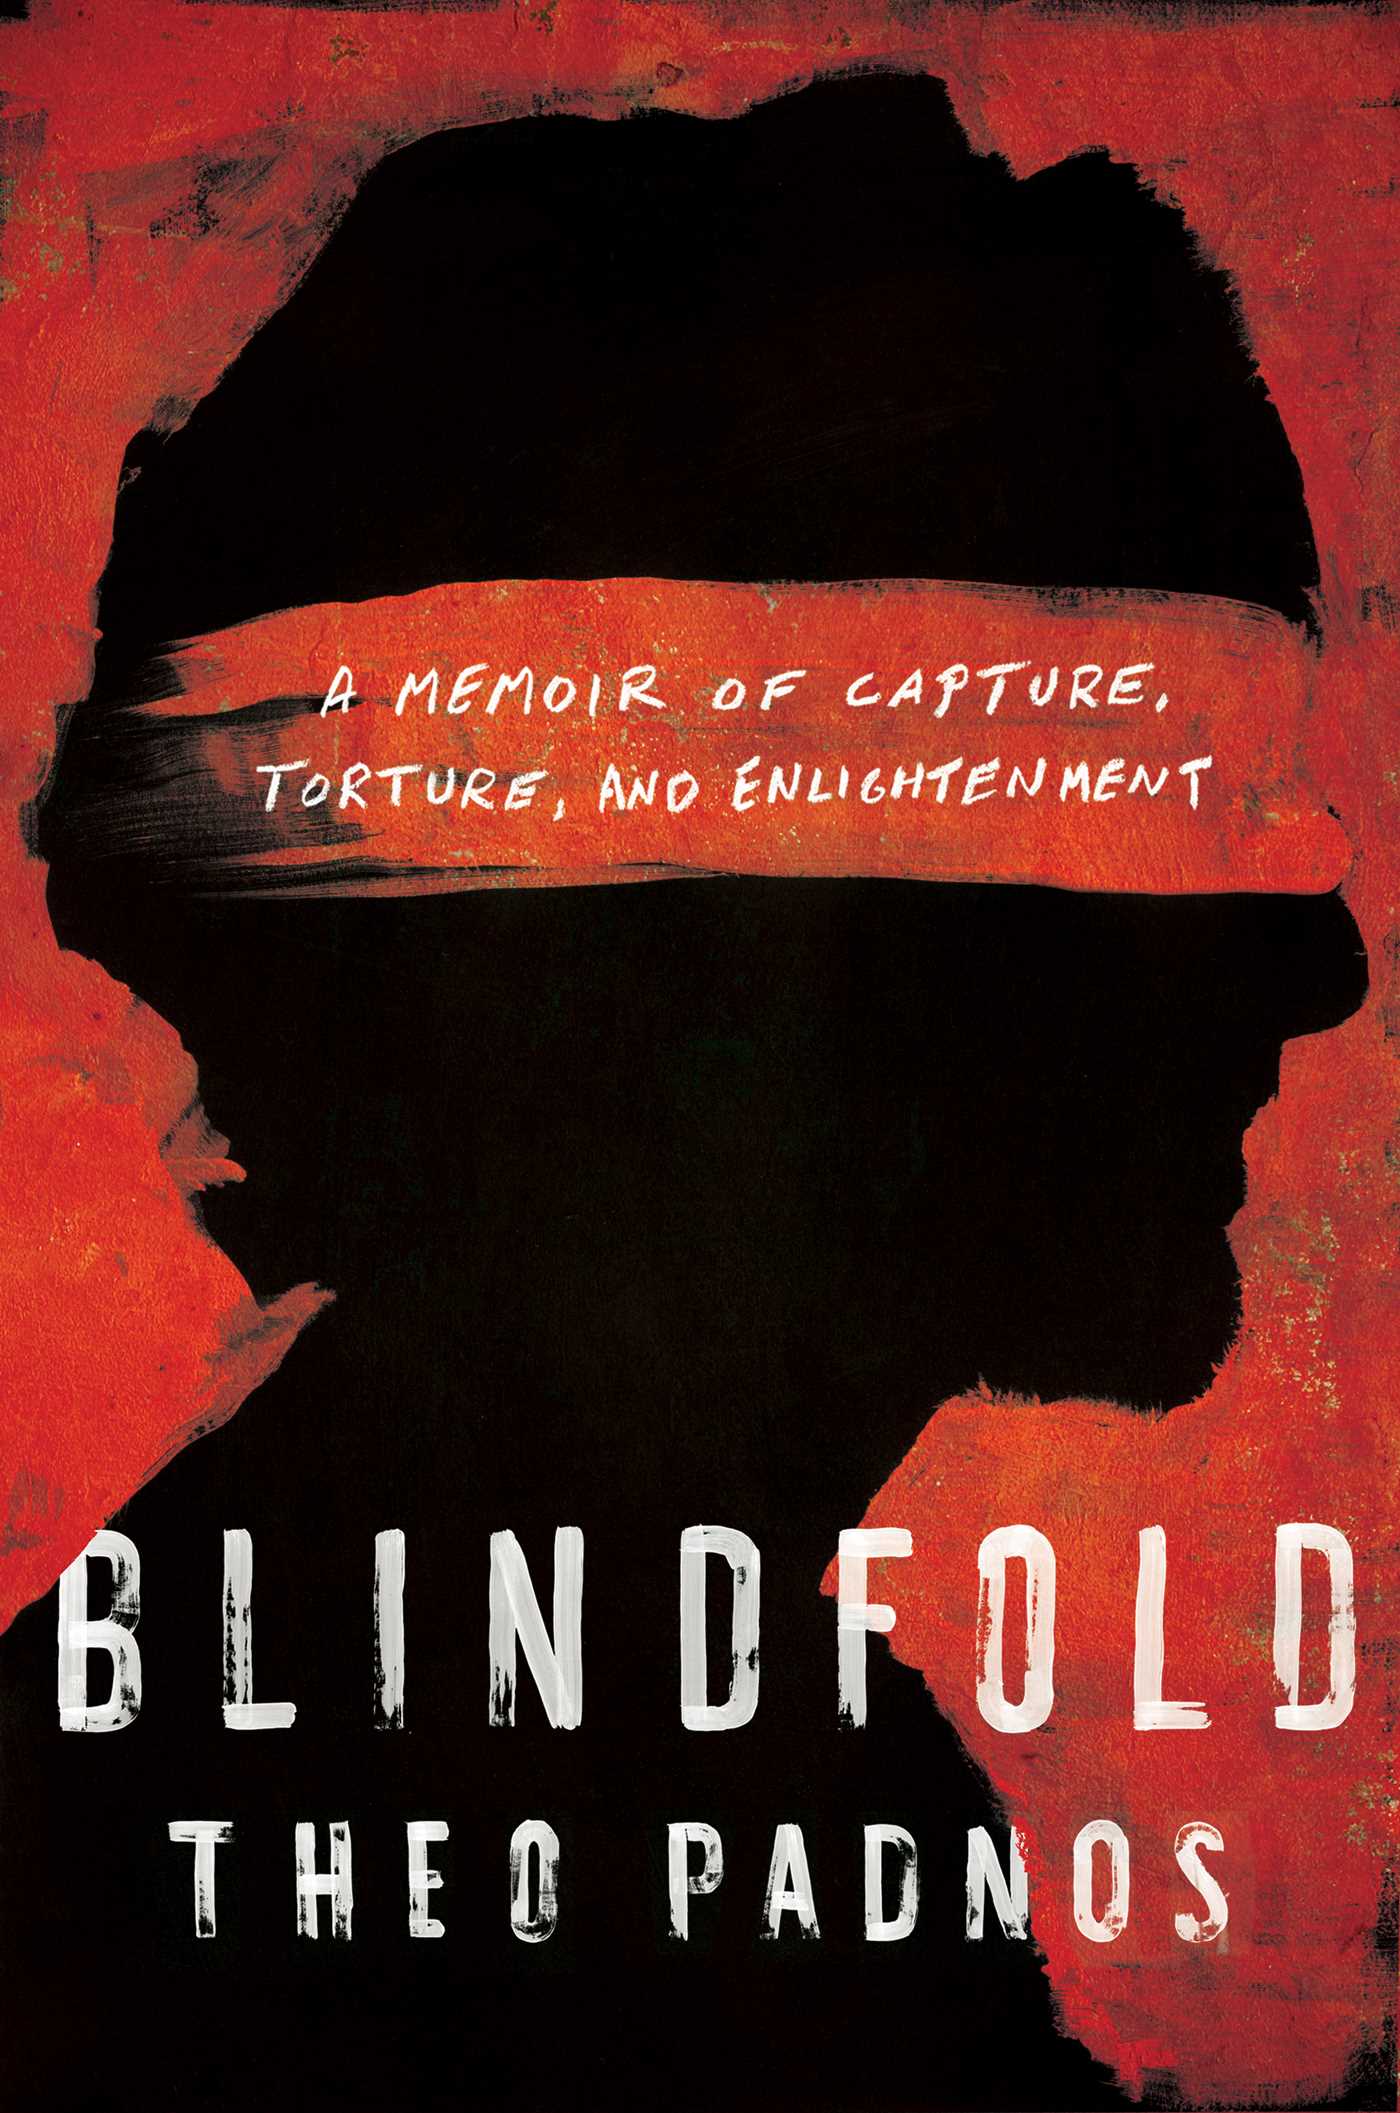 Blindfold, by Orrick Johns—A Project Gutenberg eBook